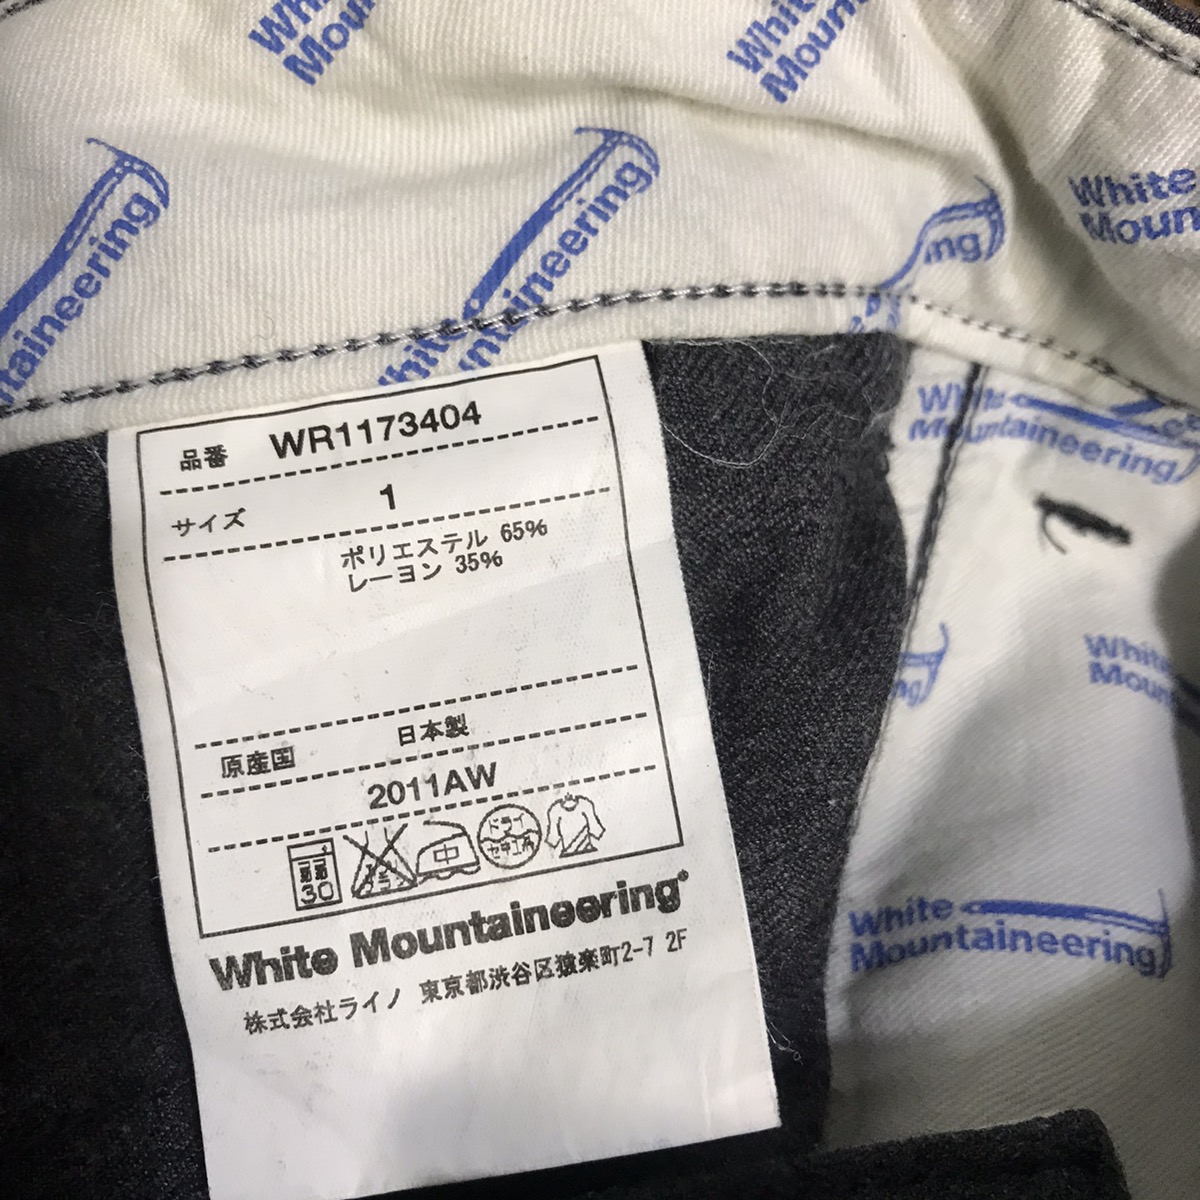 Wardrobe white mountaineering polyester rayon pants - 7